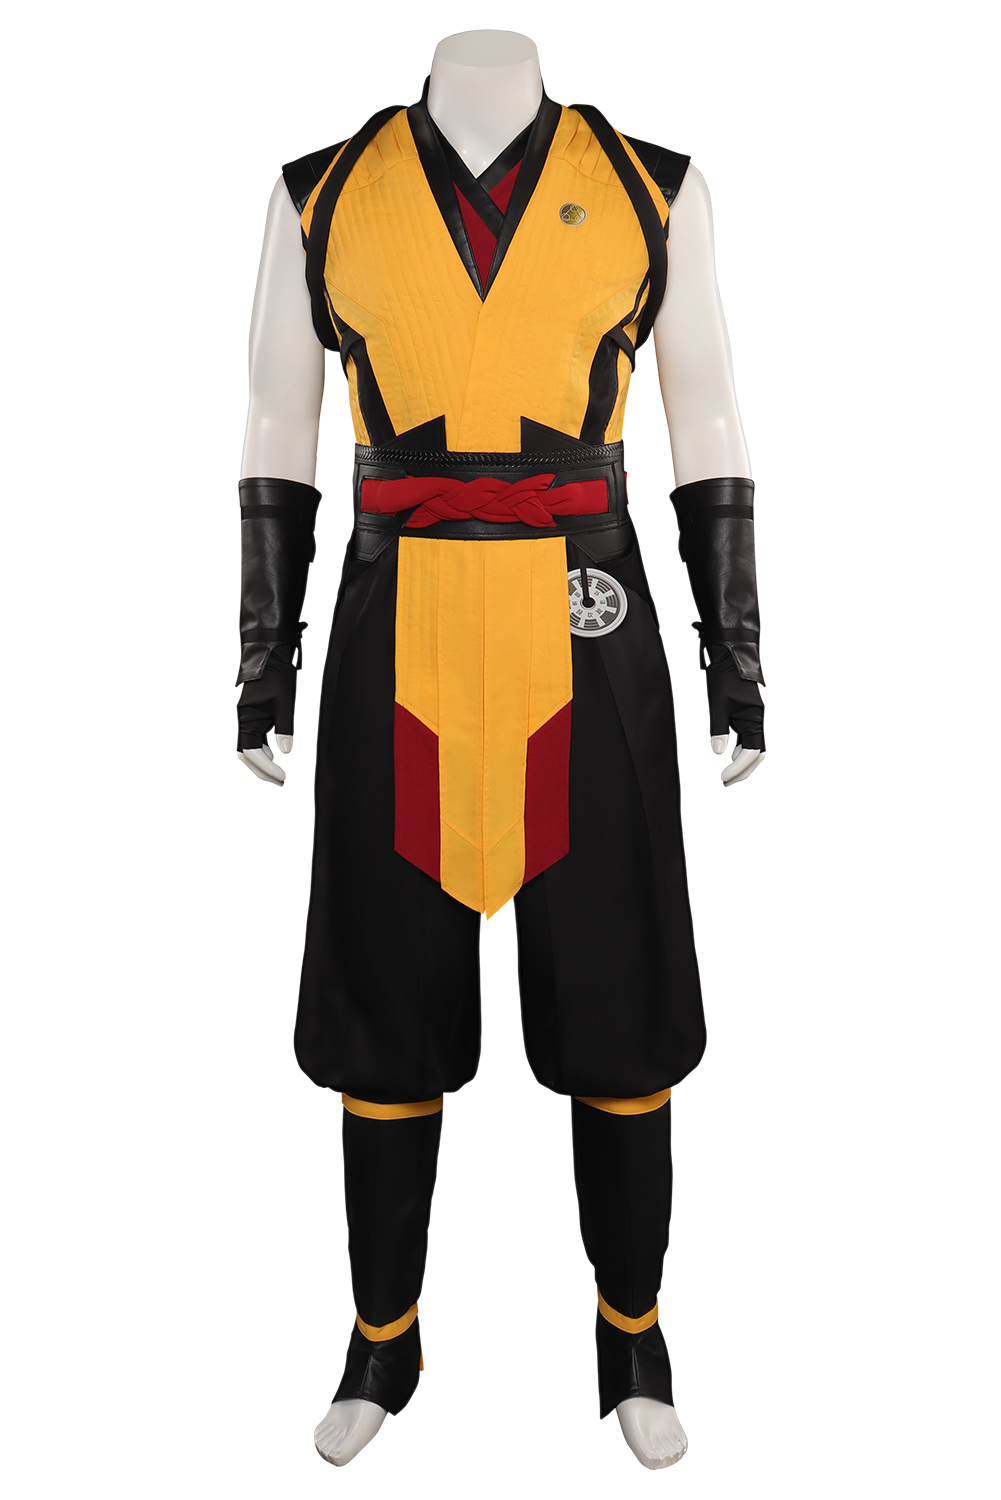 Game Mortal Kombat Scorpion Vest Pants Belt Outfits Halloween Carnival Suit Cosplay Costume